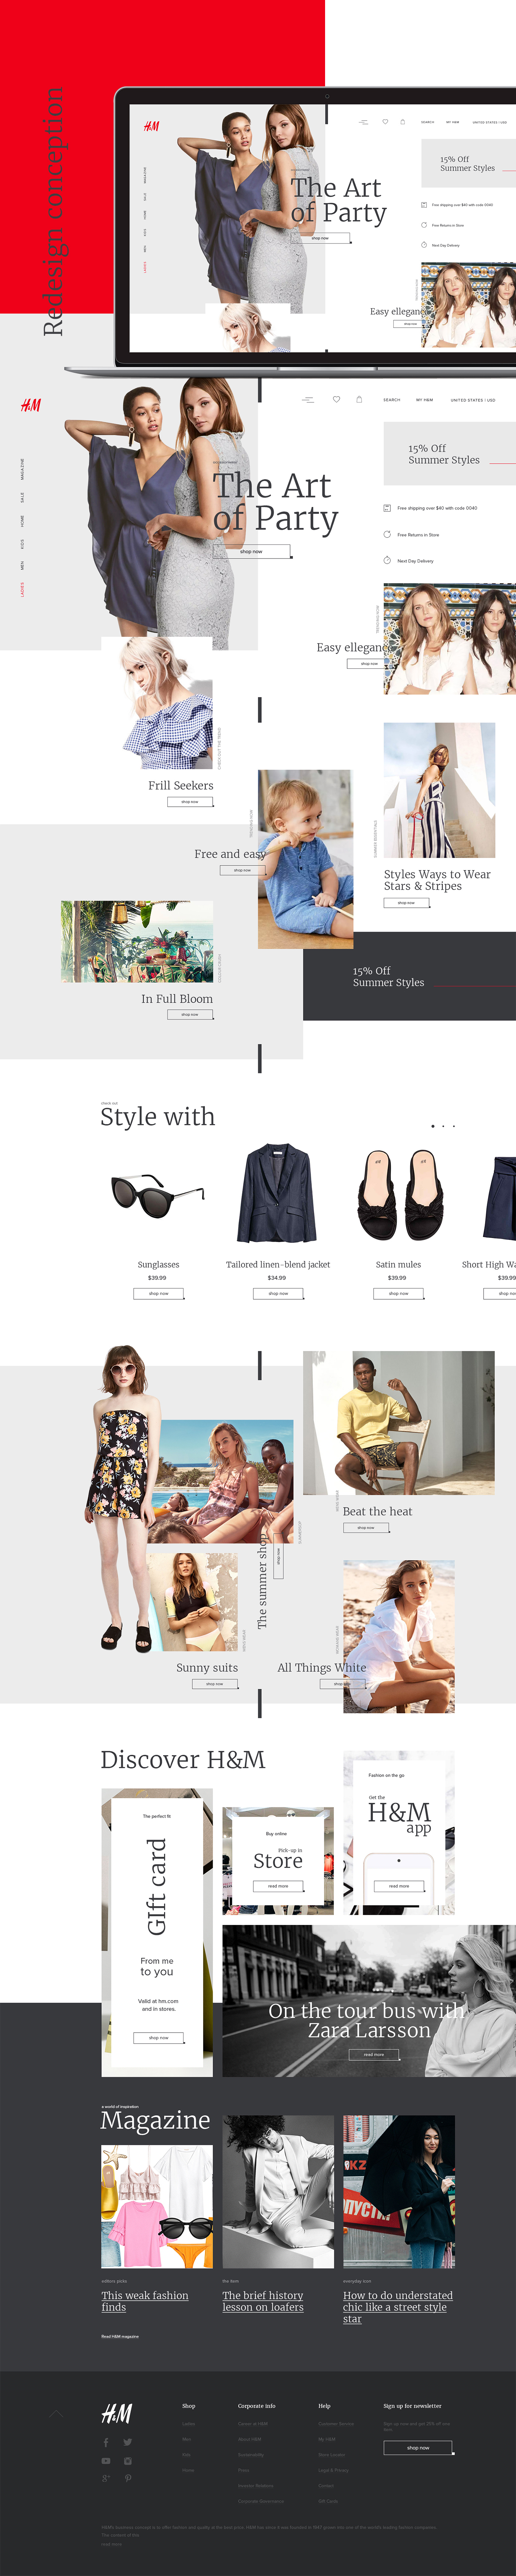 H&M Website Redesign on Behance